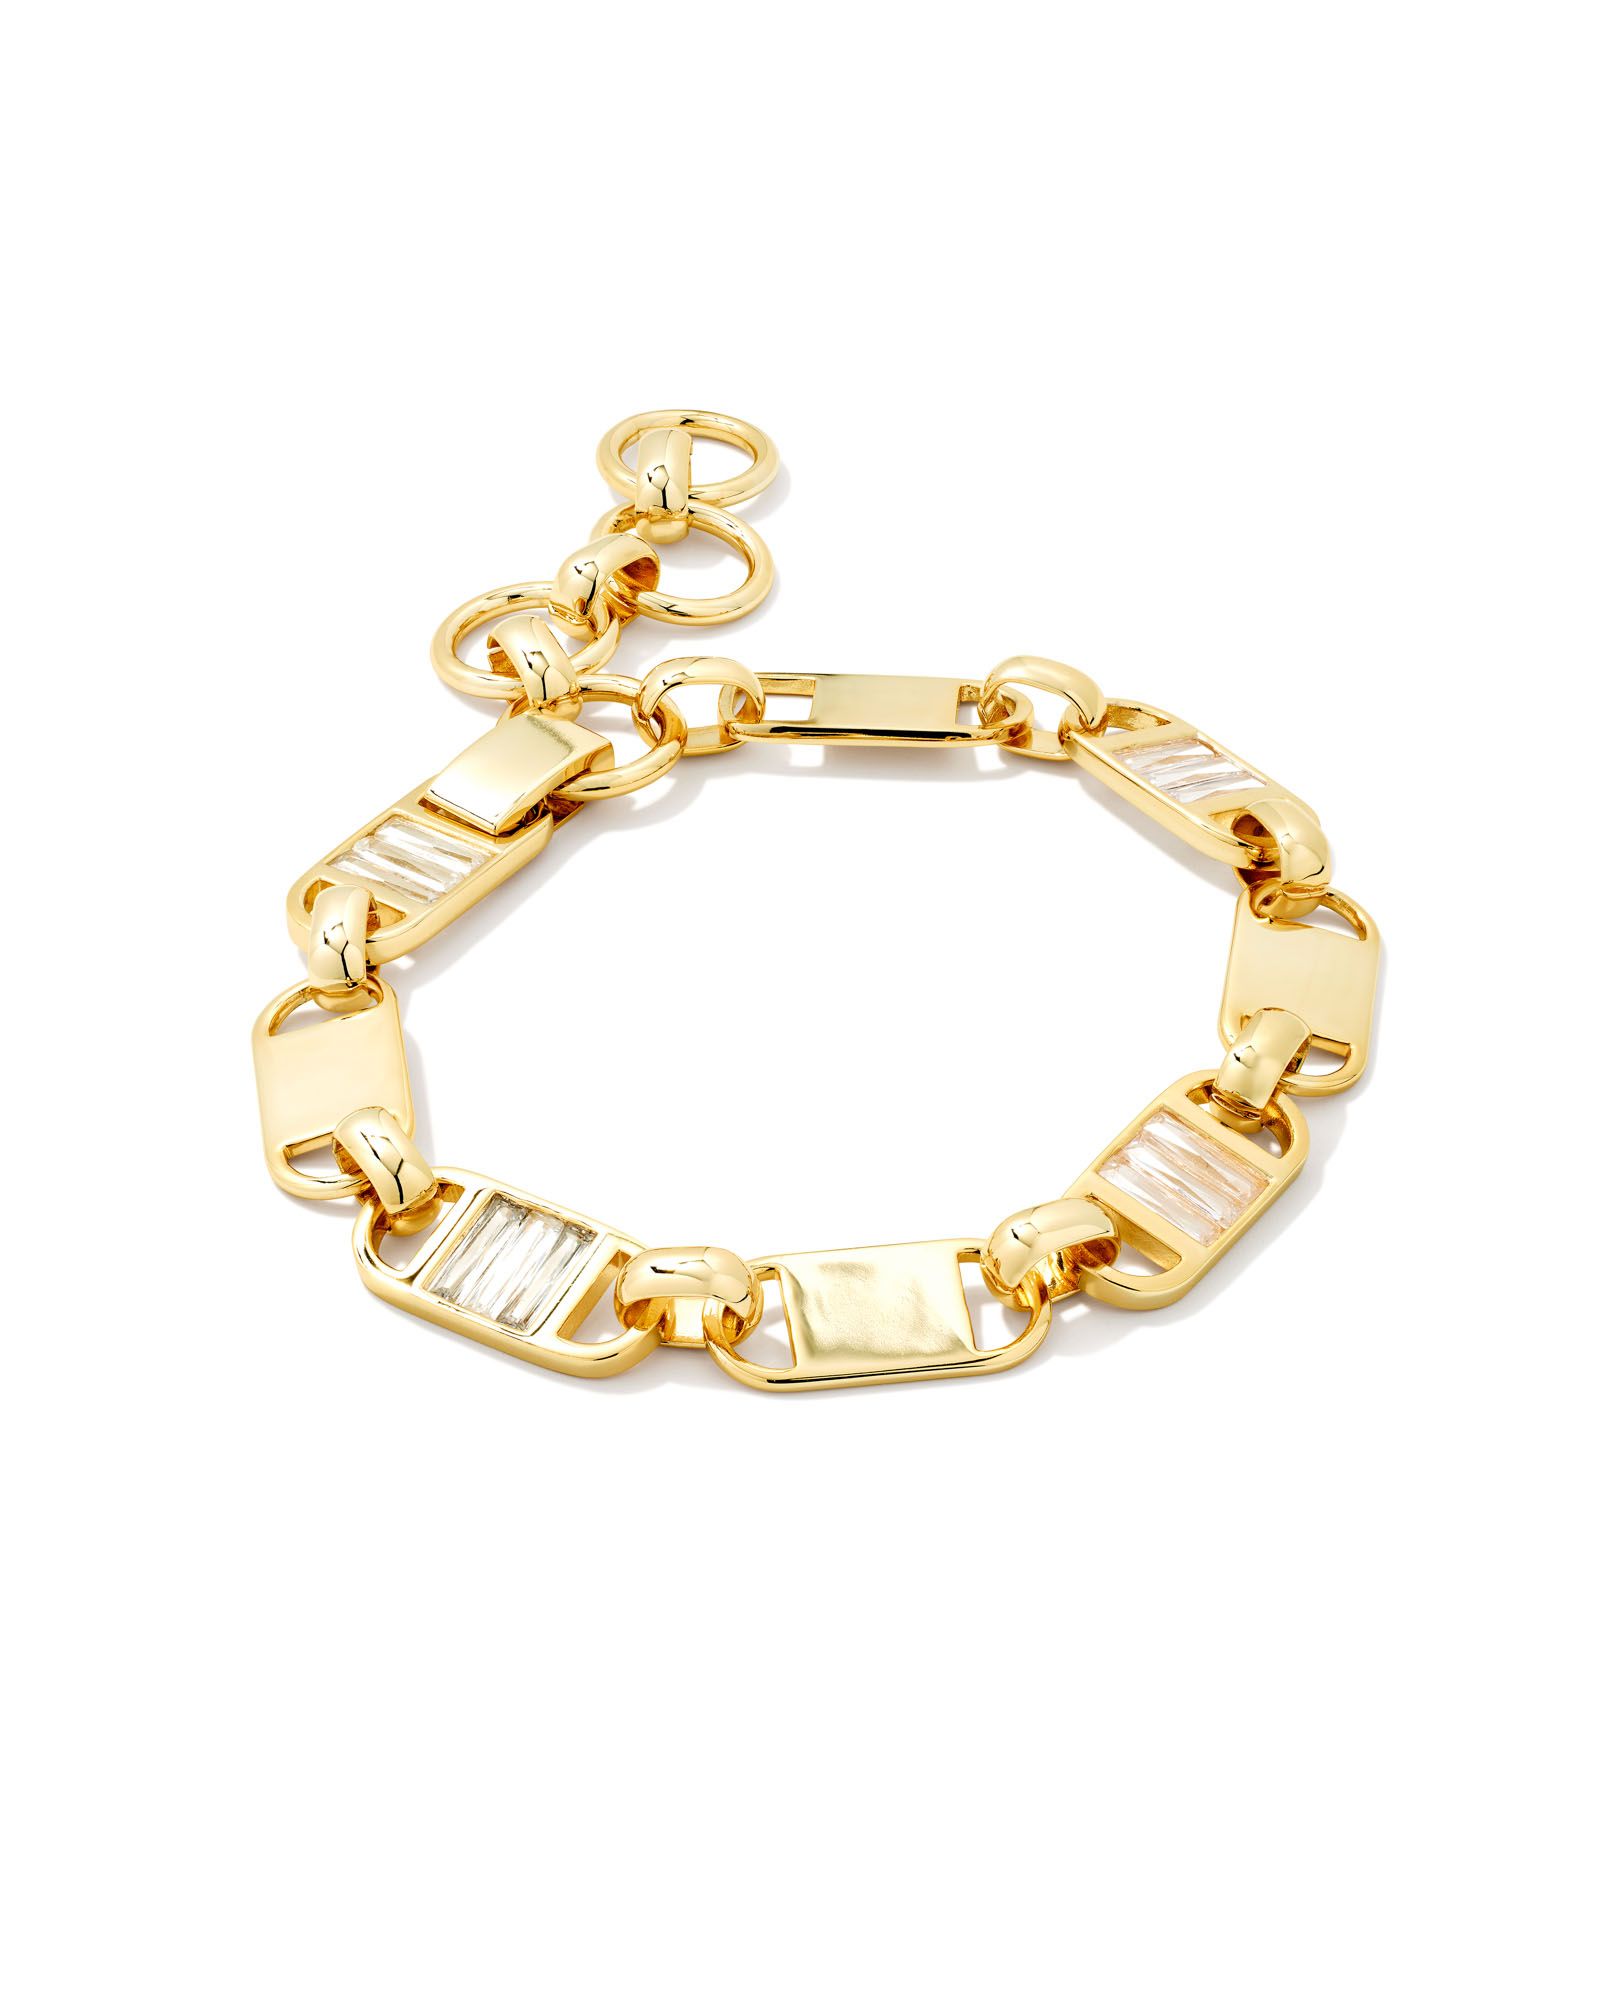 Jessie Gold Chain Bracelet in White Crystal | Kendra Scott | Kendra Scott